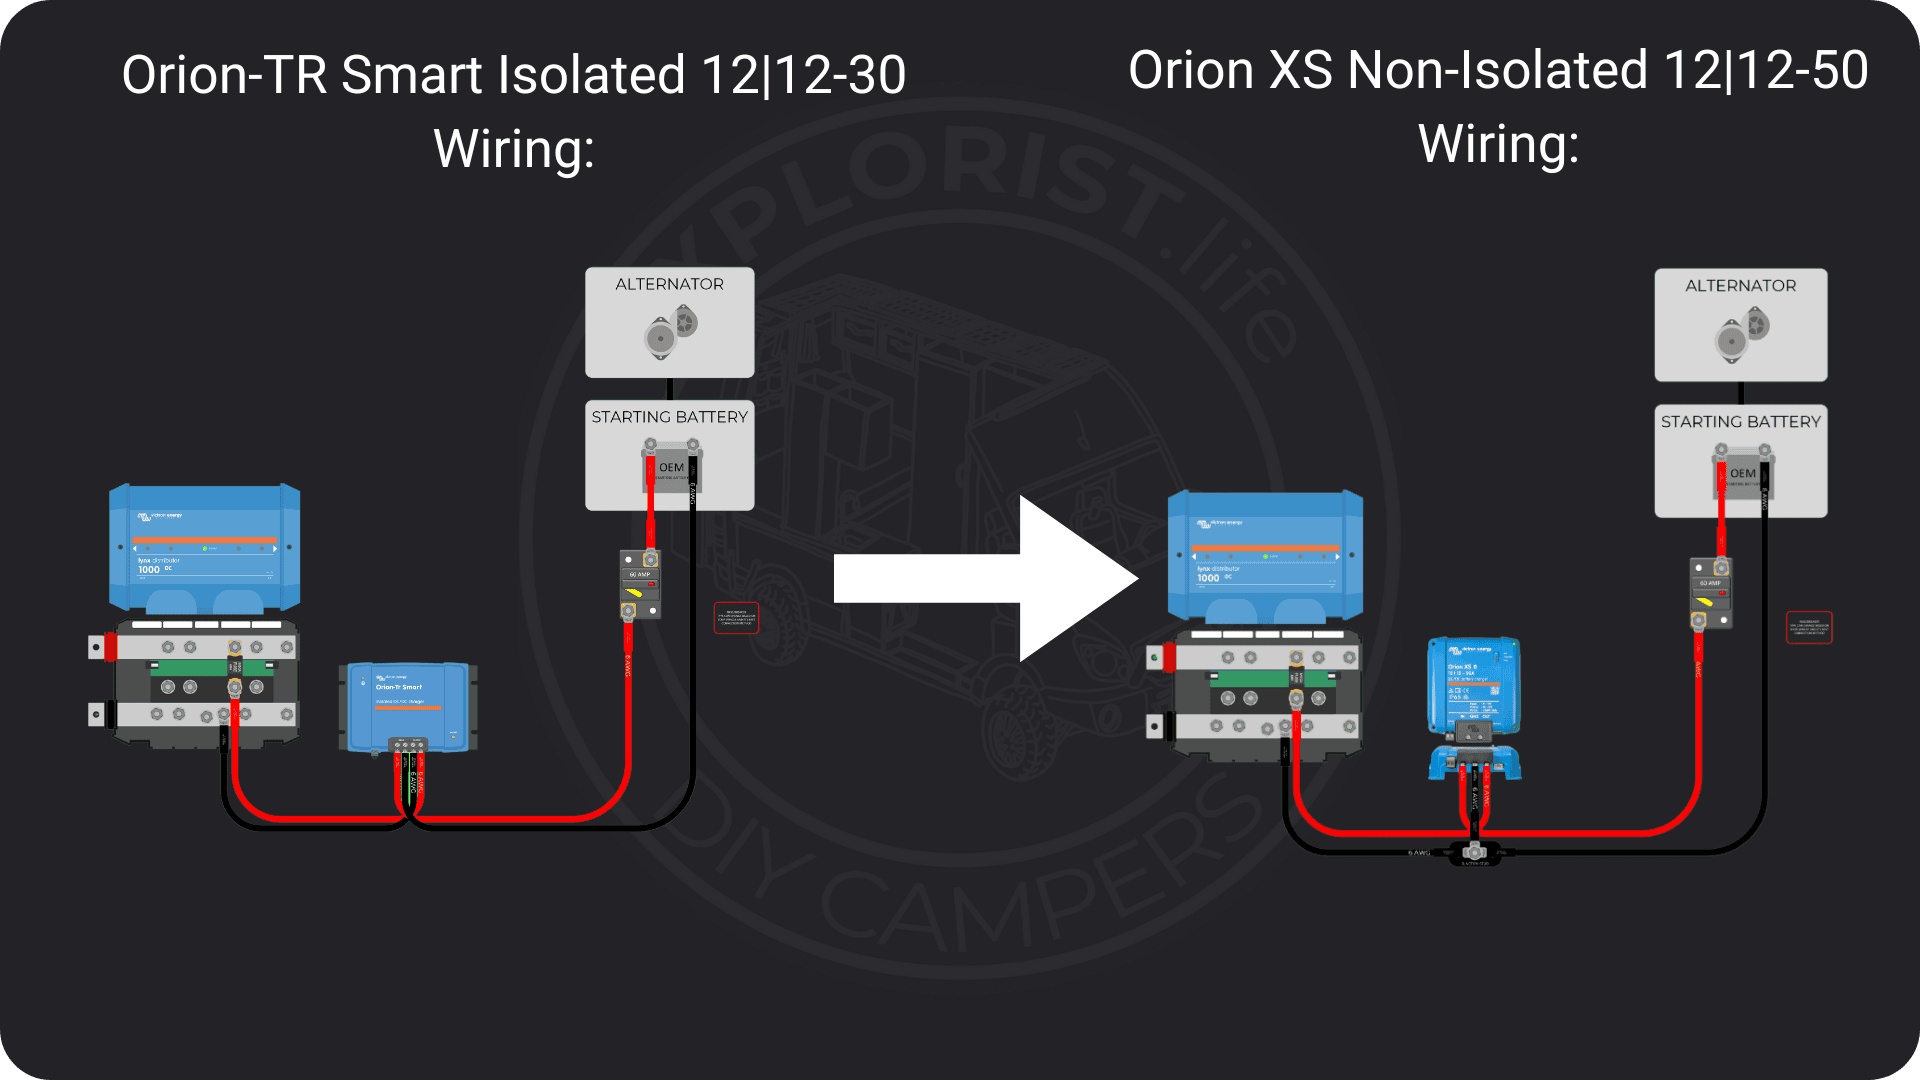 Orion XS Retrofit Change